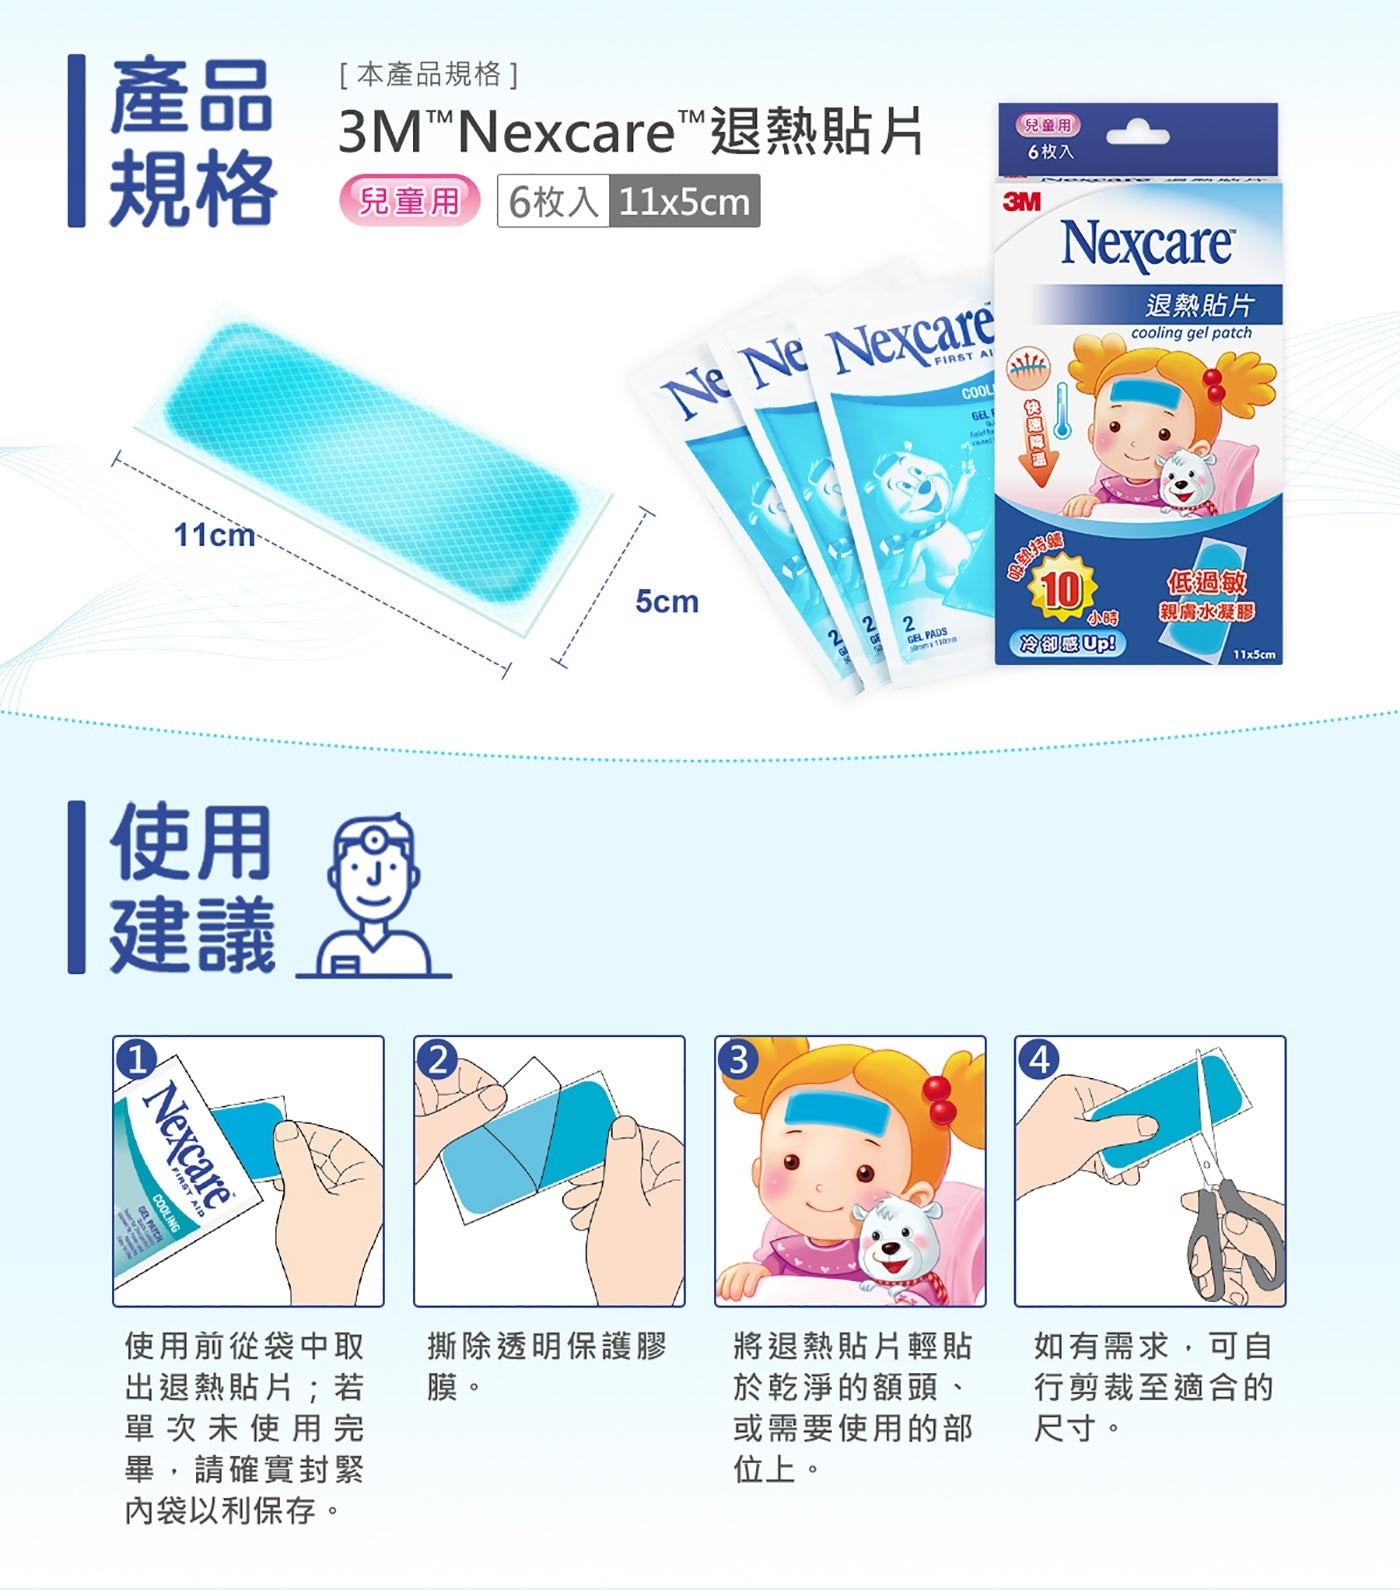 3M Nexcare 兒童用退熱貼片一貼就涼，冷卻感持續10小時，低過敏親膚水凝膠，可用於牙痛、肌肉腫脹不適。